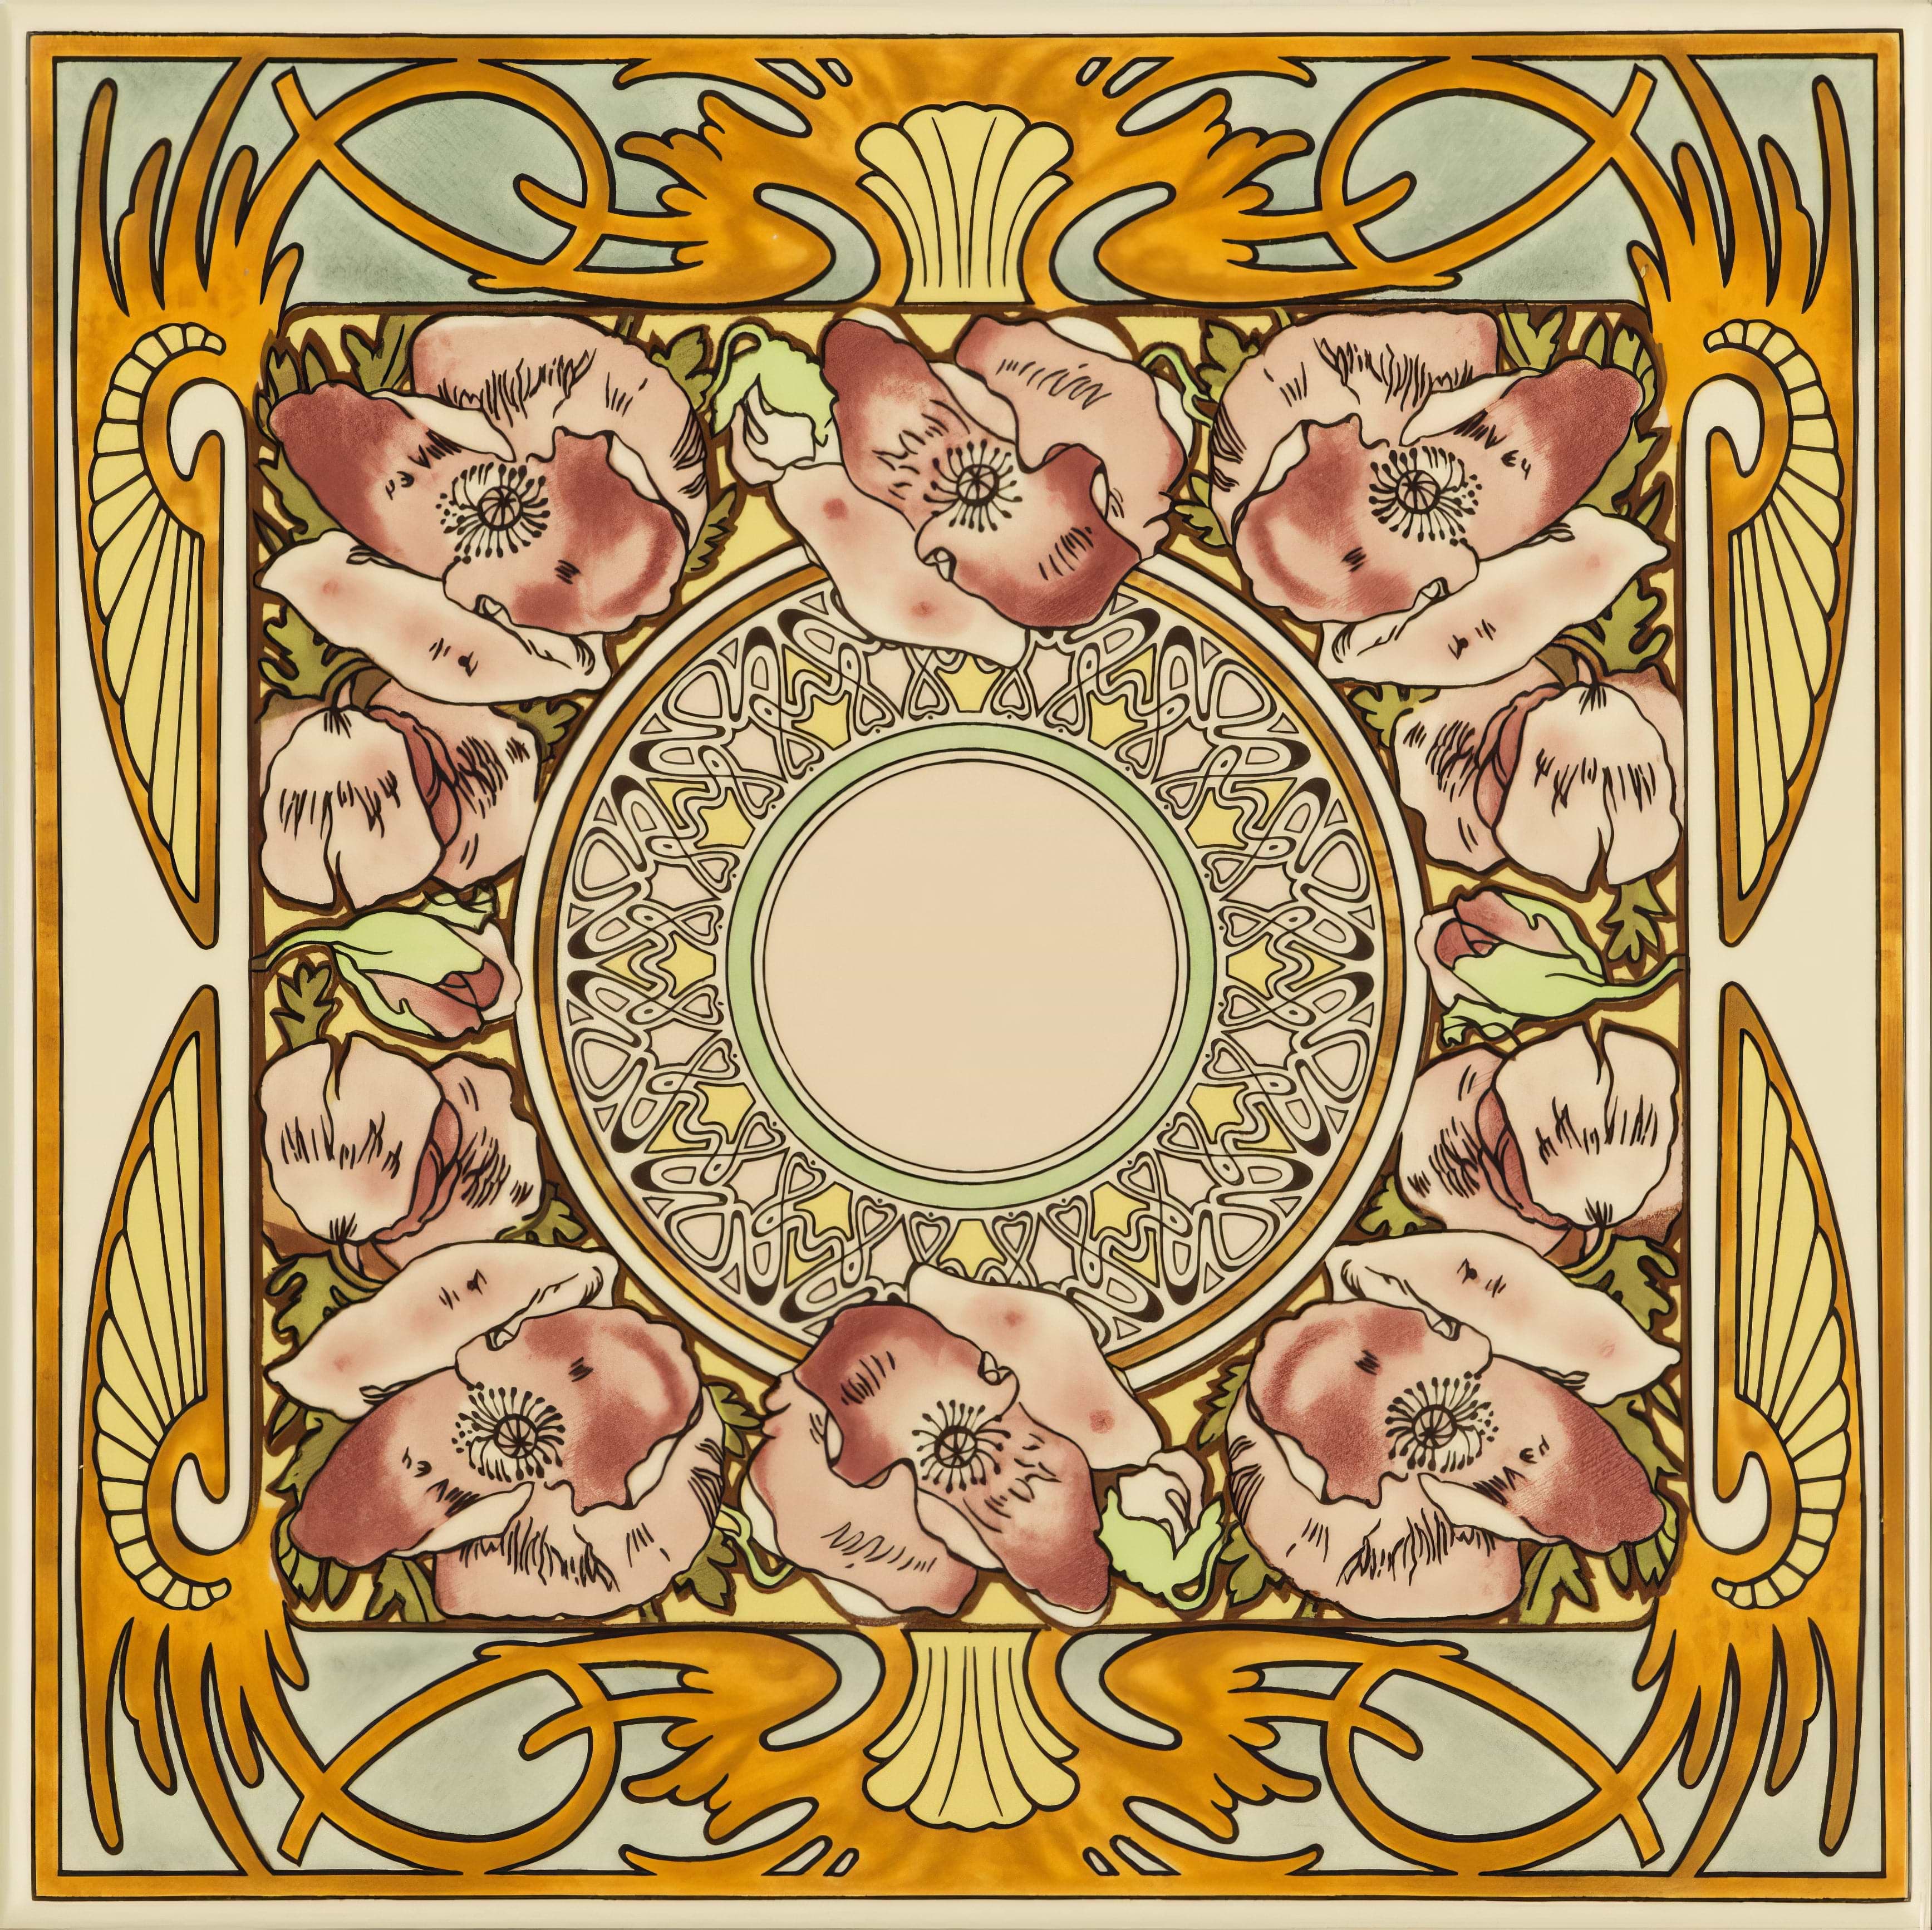 Alphonse Mucha Nocturnal Slumber Single Floral Tile on County White - Hyperion Tiles